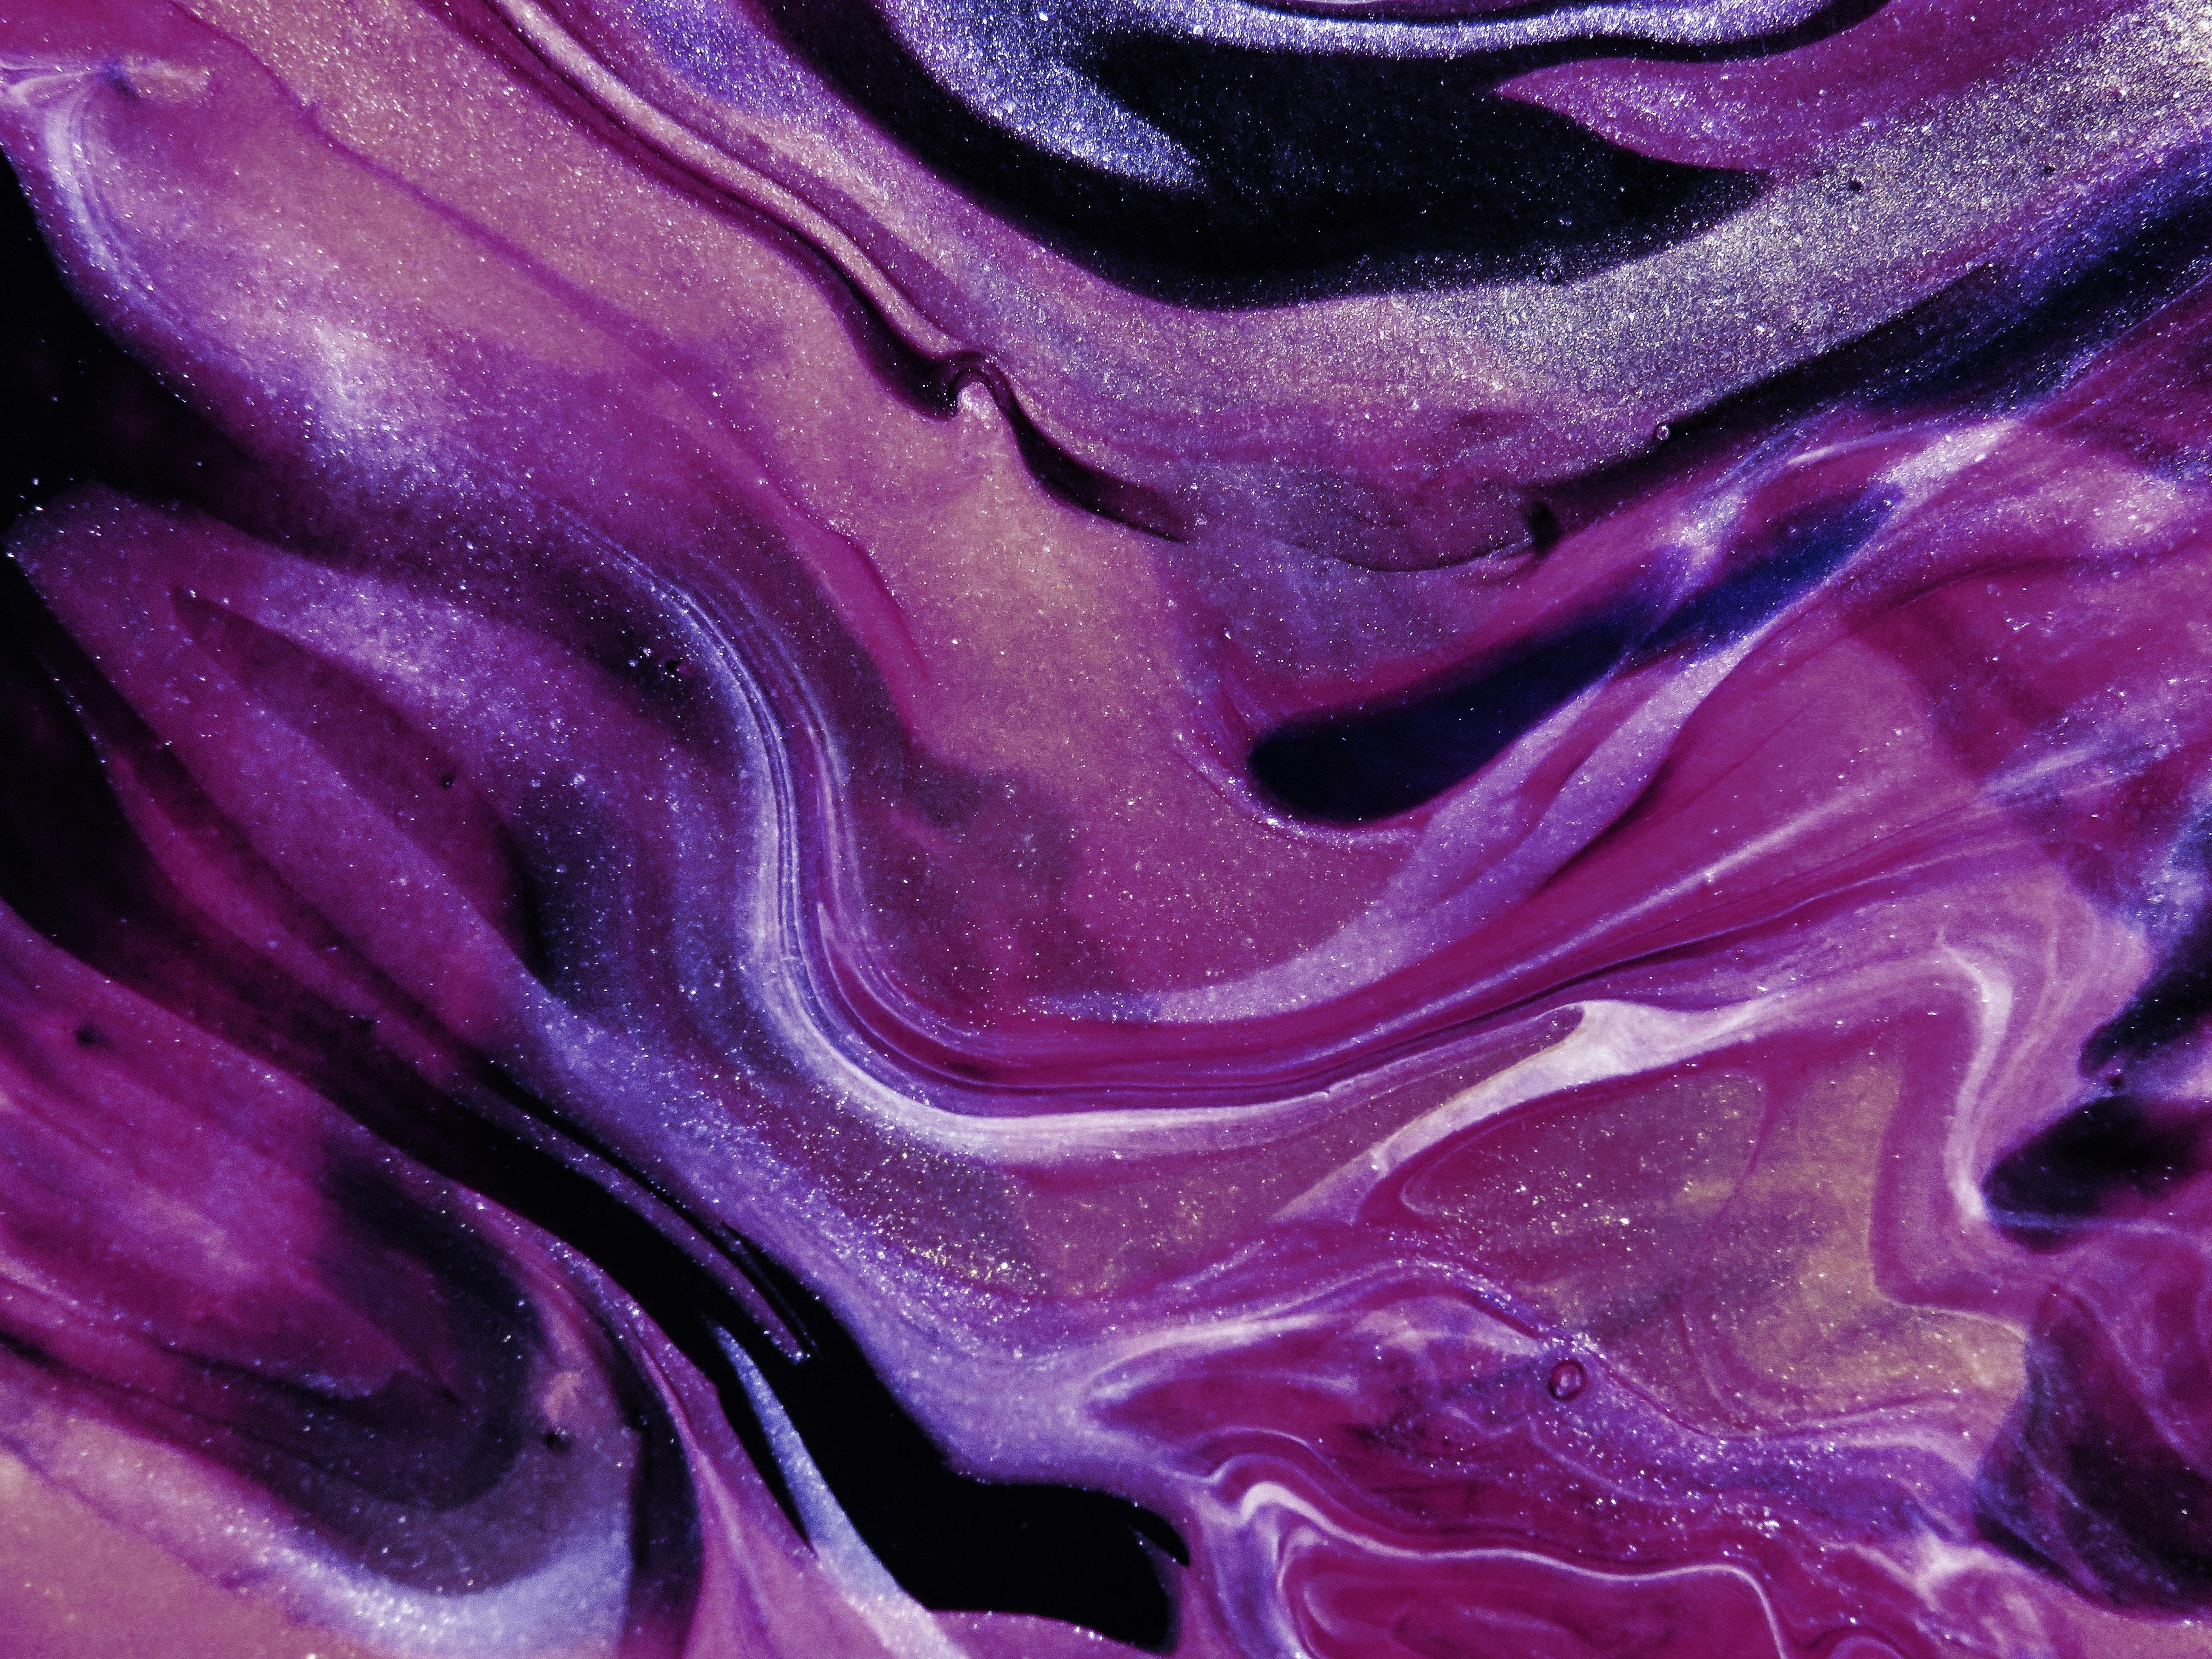 purple abstract art wallpaper